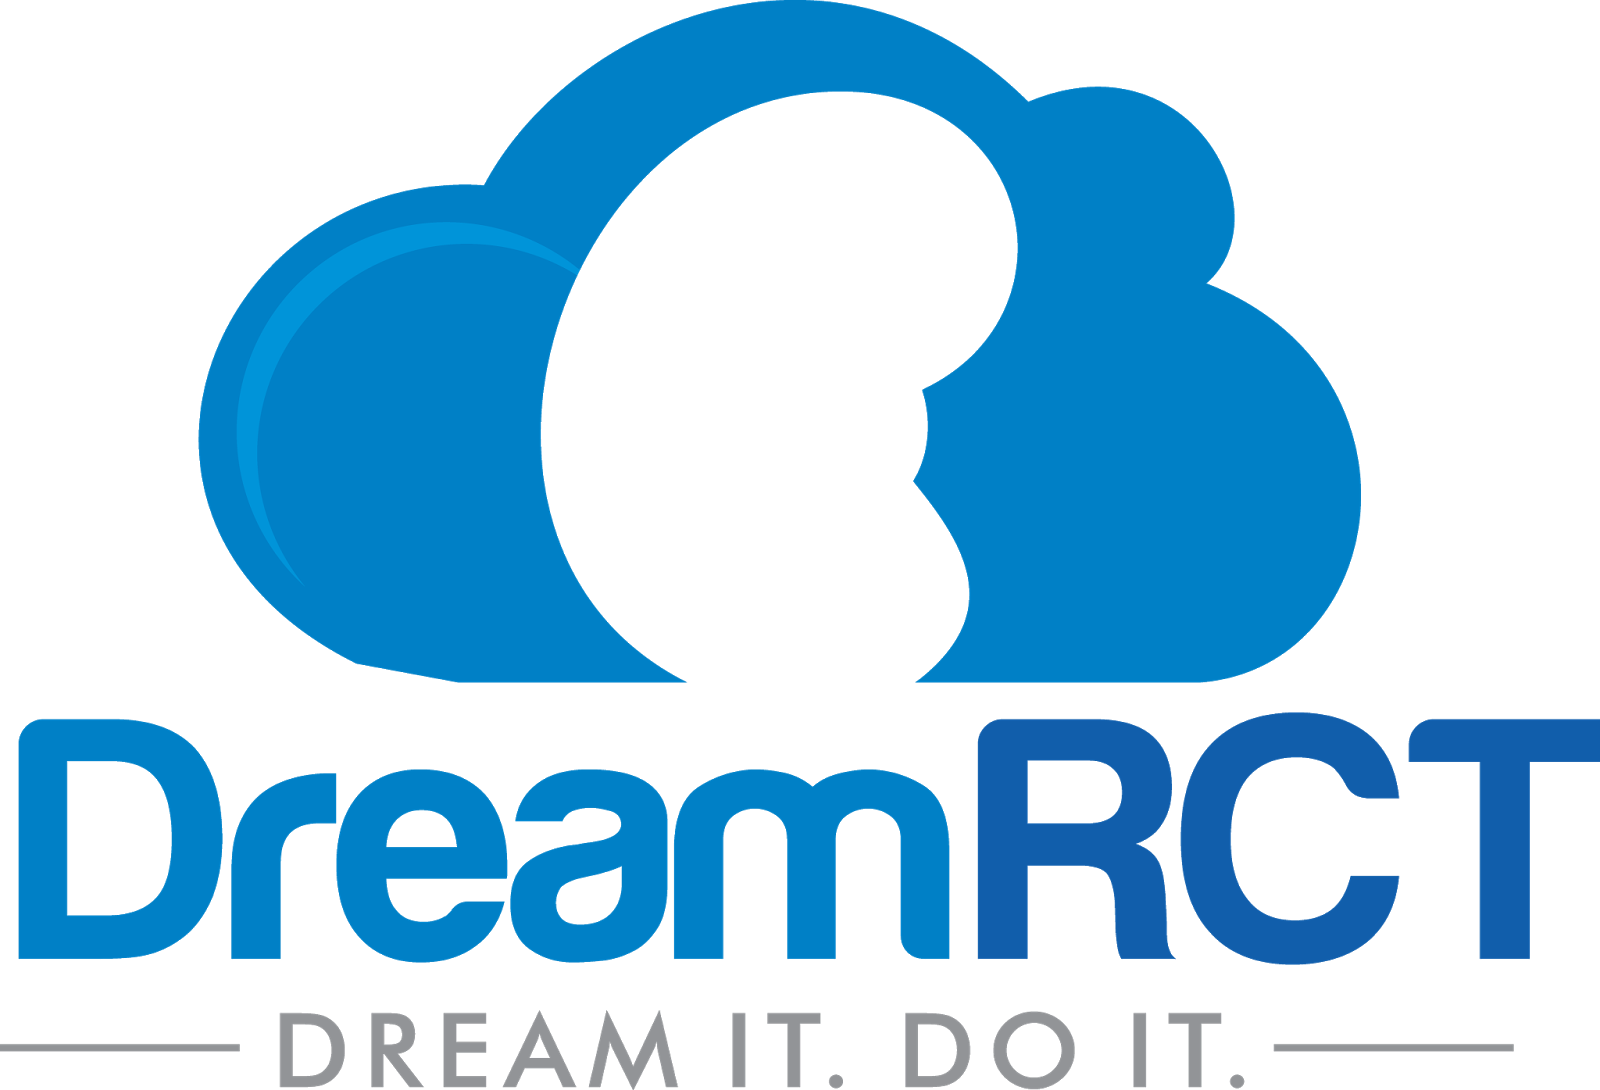 Dream RCT logo _LG